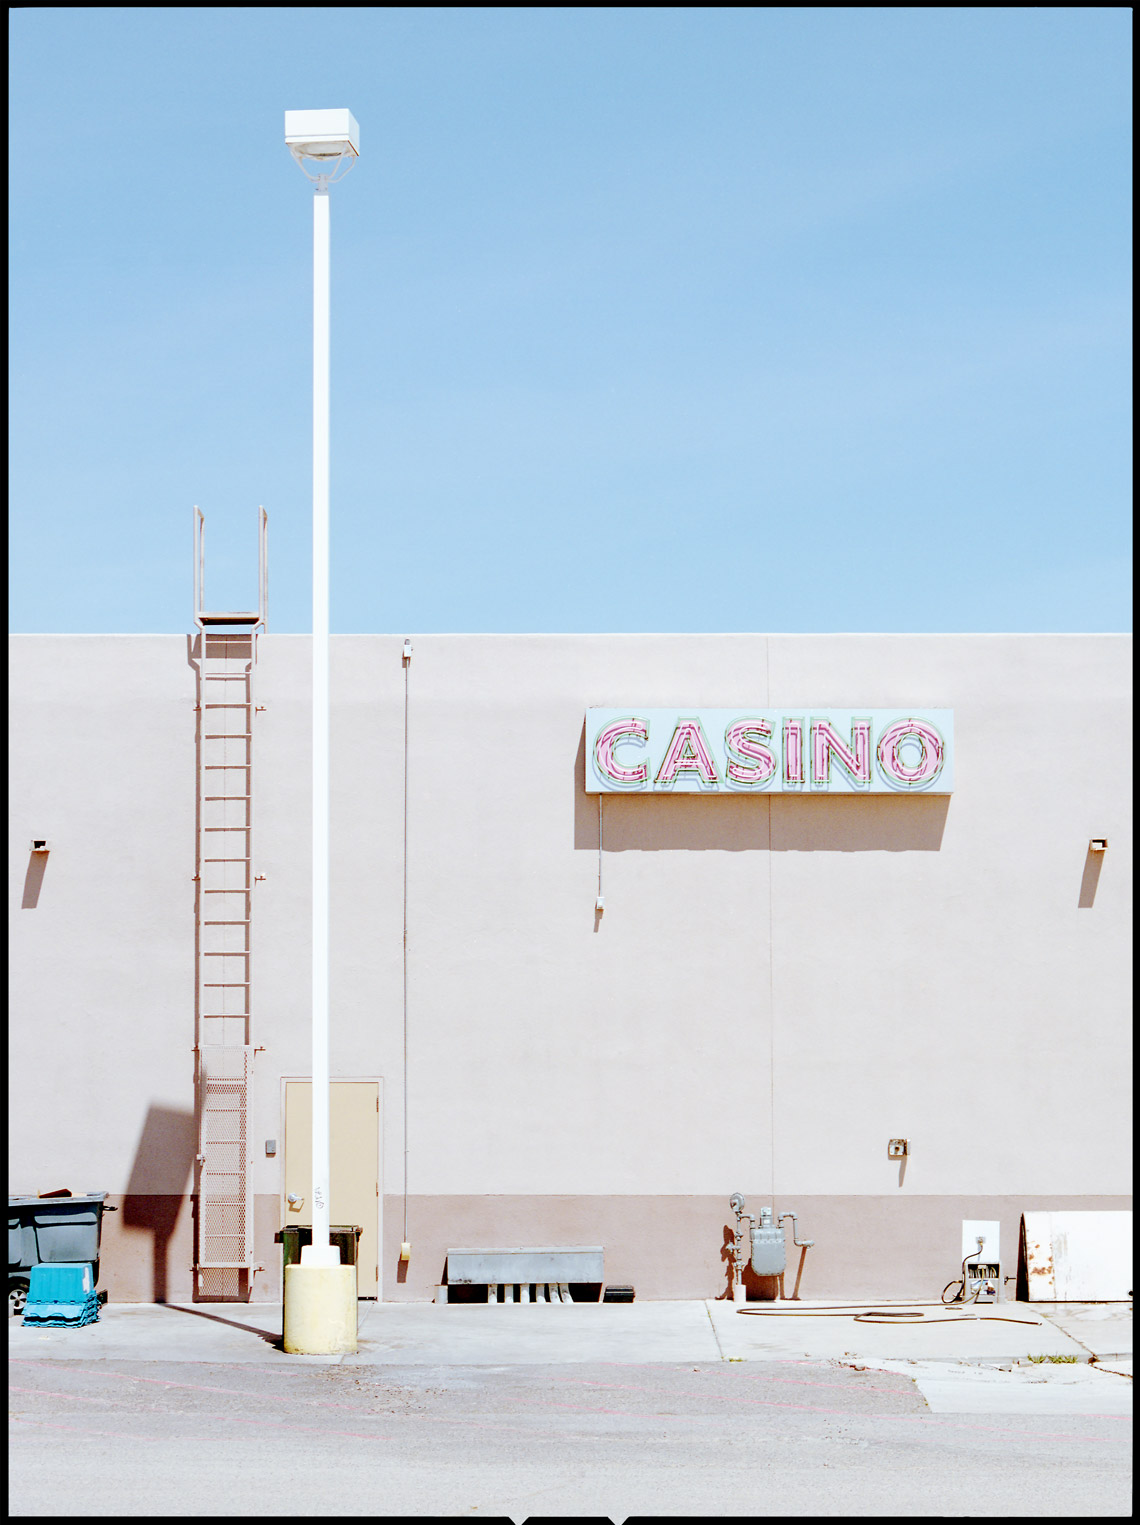 Santa Fe, New Mexico -  Stephen Denton Photography -  Los Angeles, California based  Commercial Photographer